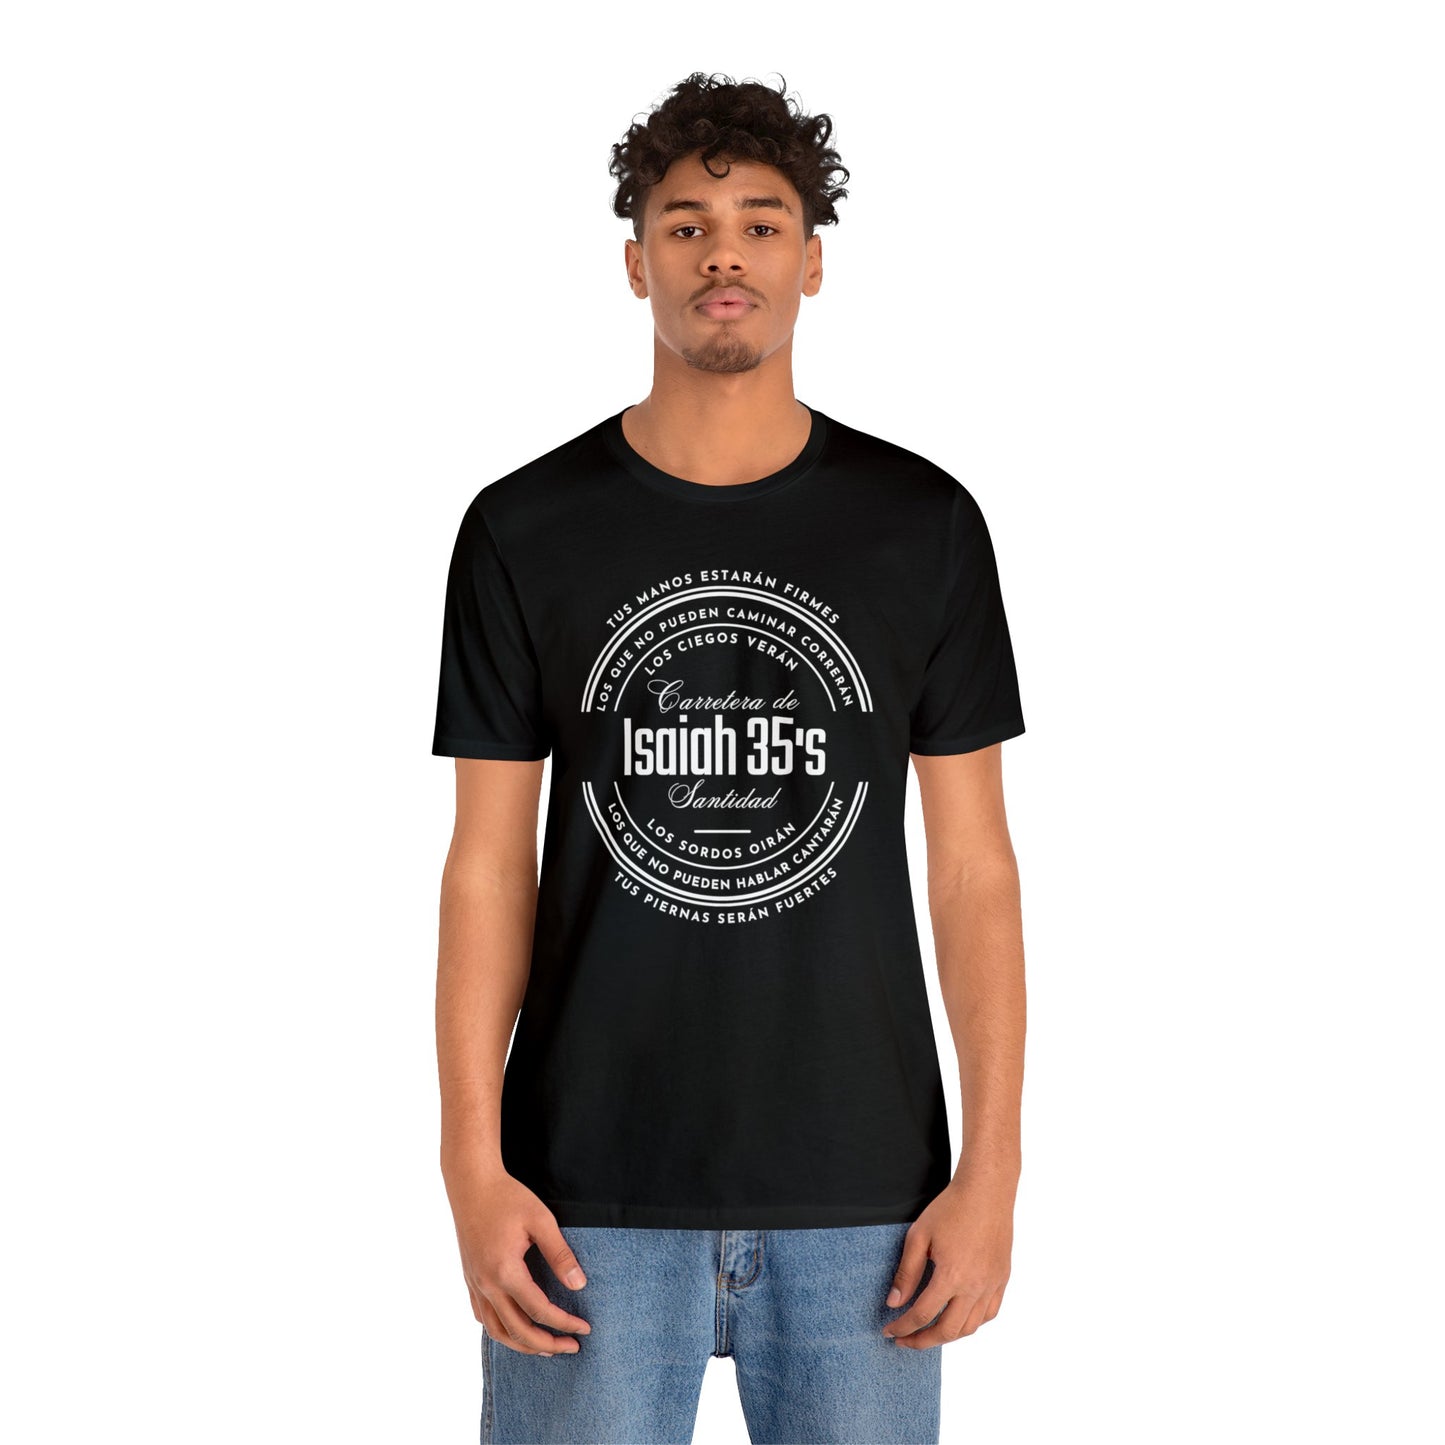 Isaiah 35, Spanish, Christian T-shirt for Men and Women